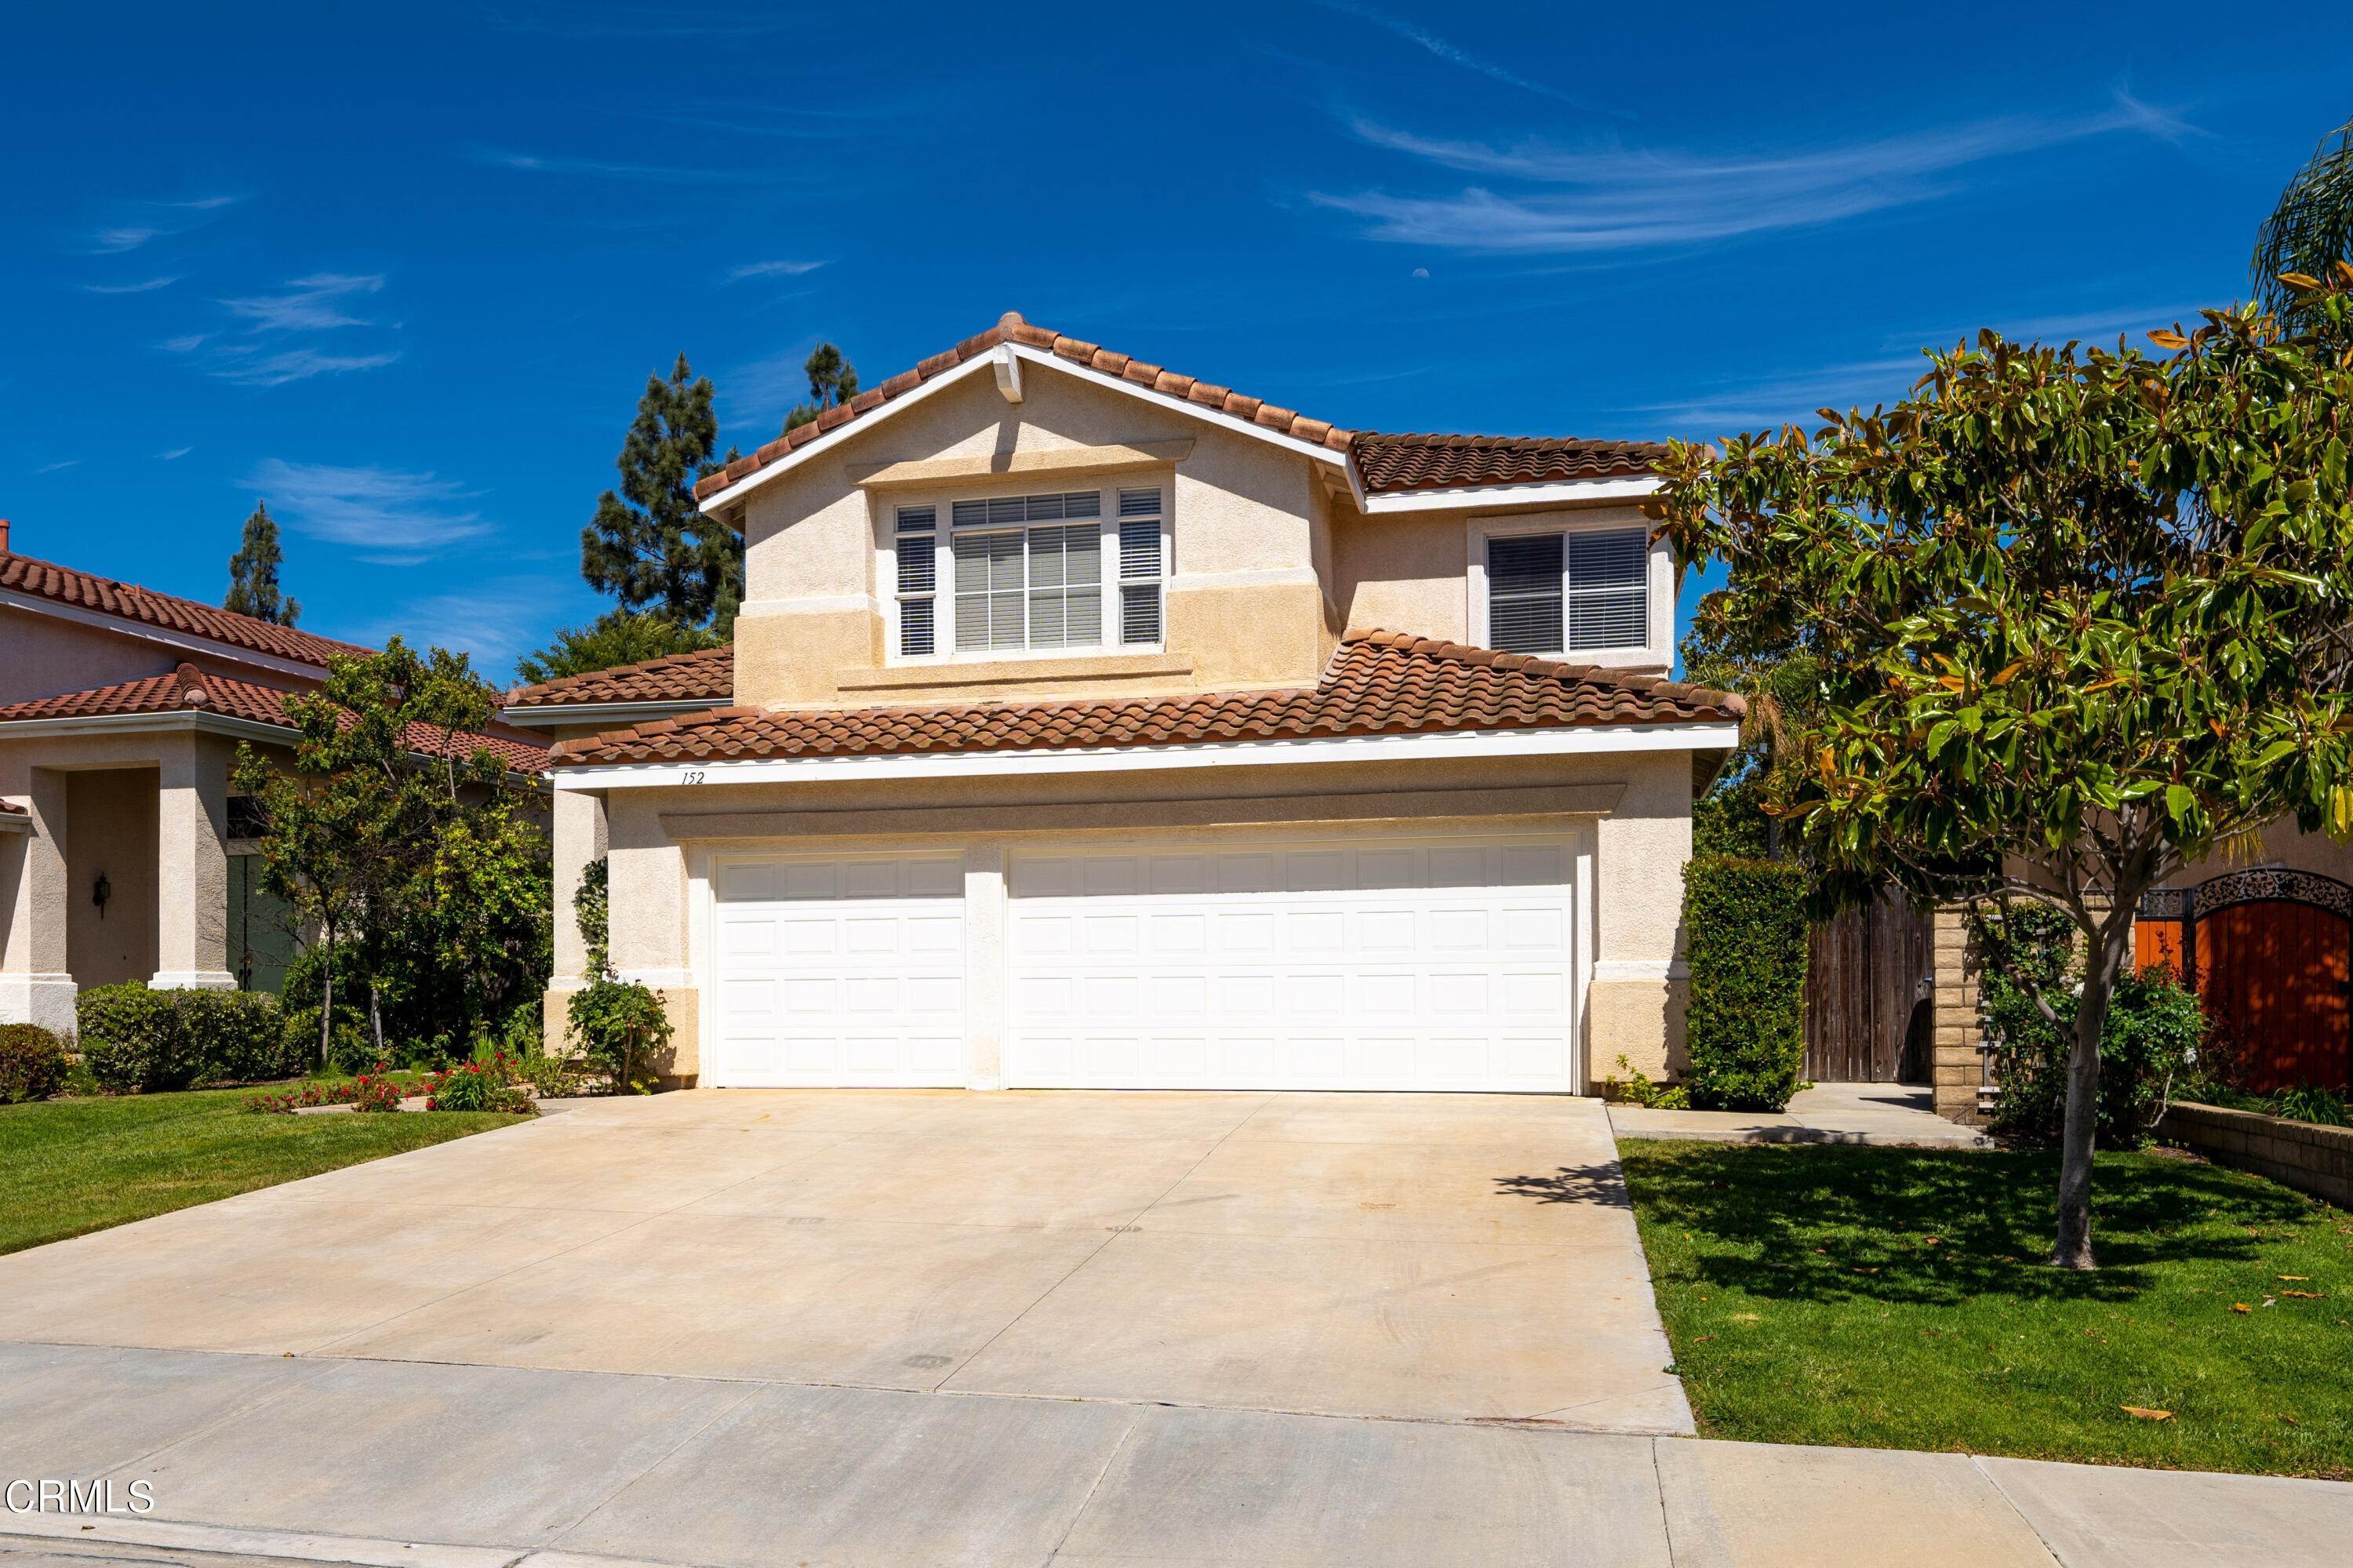 2. Single Family Homes for Sale at 152 Via Olivera Camarillo, California 93012 United States